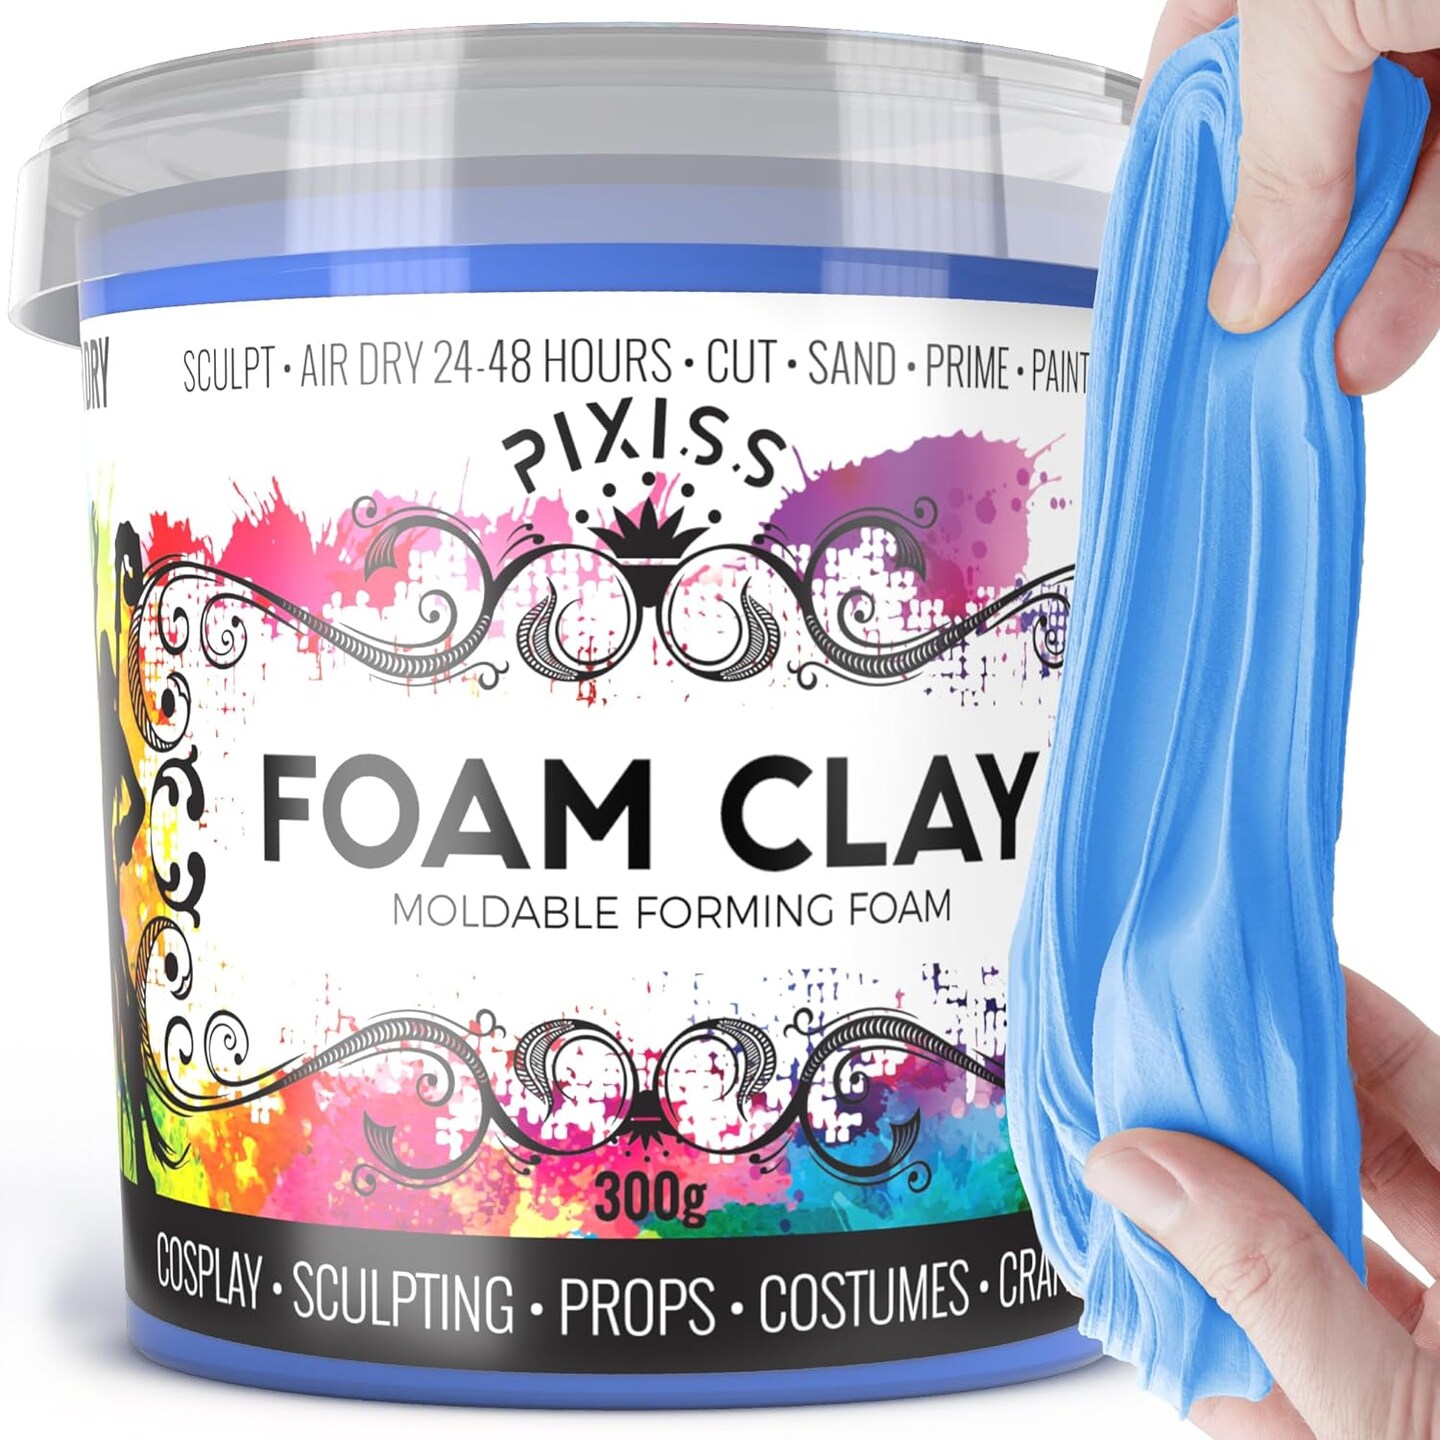 Moldable Cosplay Foam Clay (Blue) - Premium Modeling Foam Clay Air